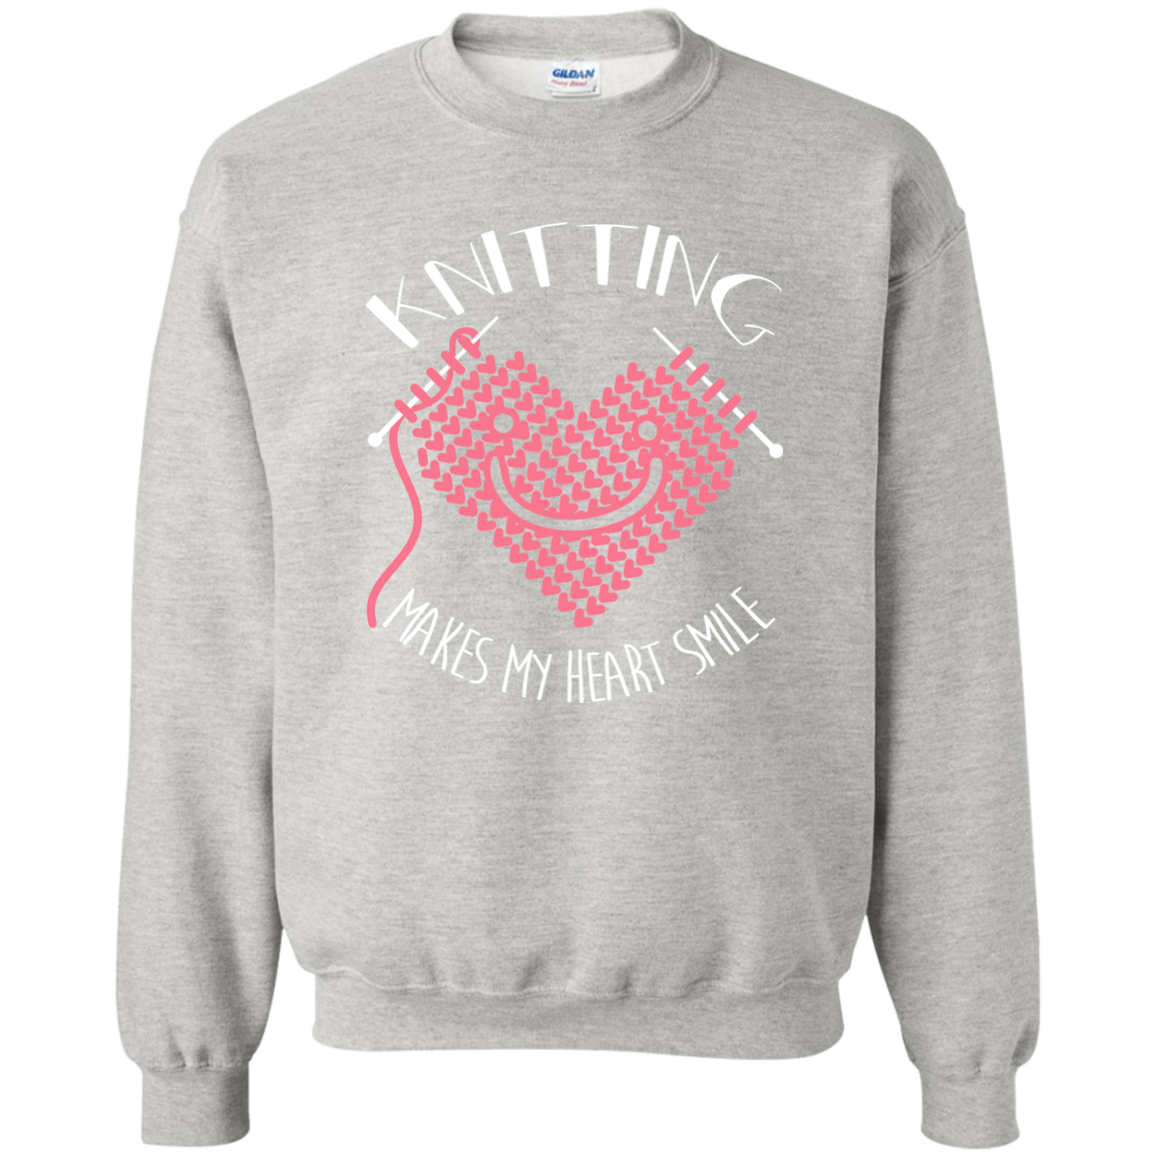 Knitting Makes My Heart Smile Crewneck Pullover Sweatshirt